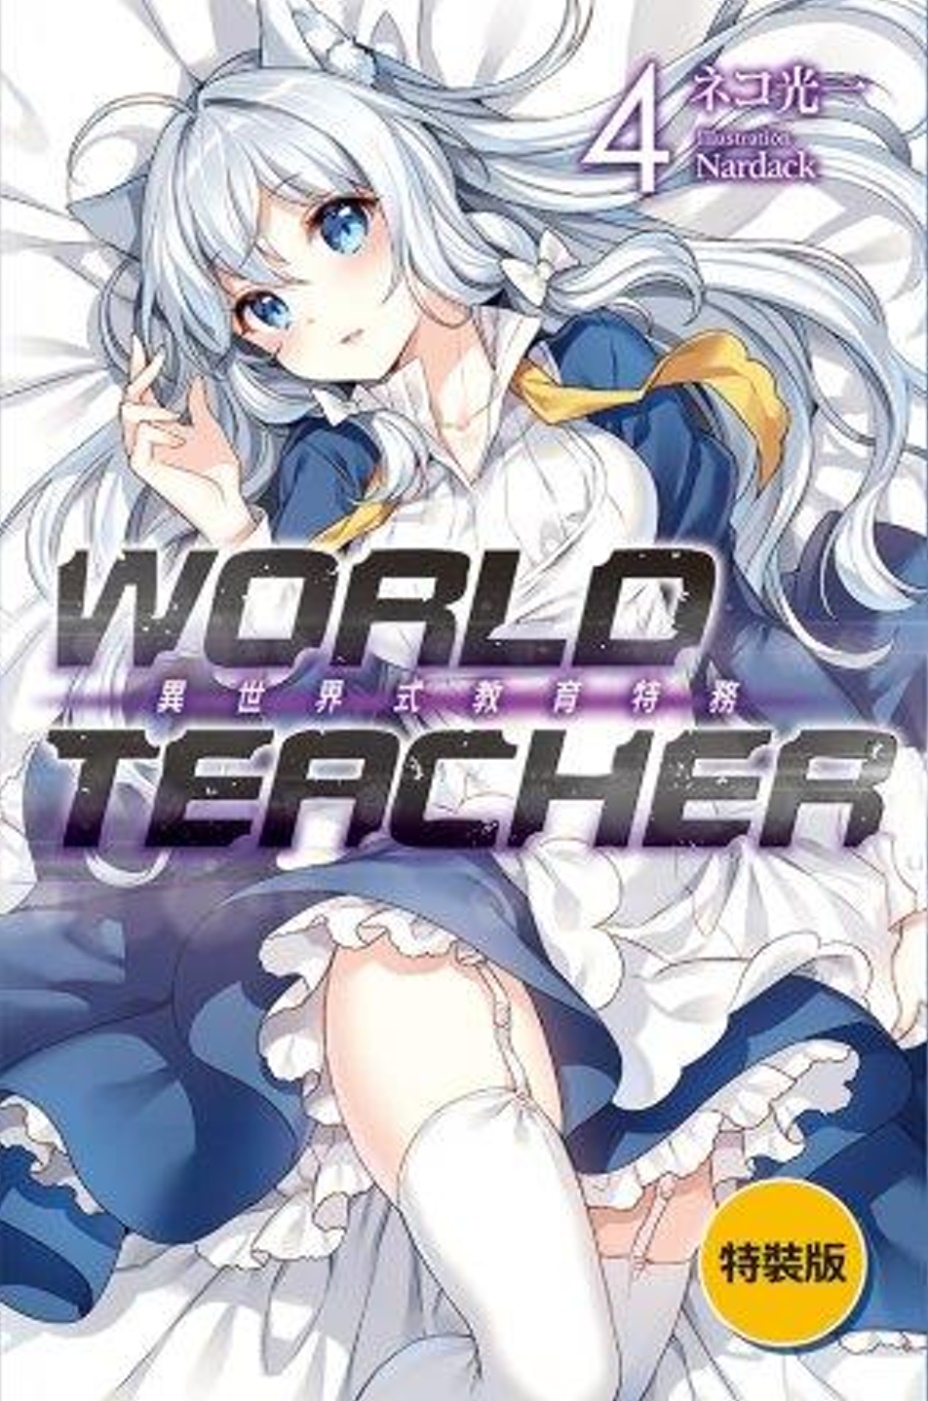 WORLD TEACHER 異世界式教育特務(04)特裝版